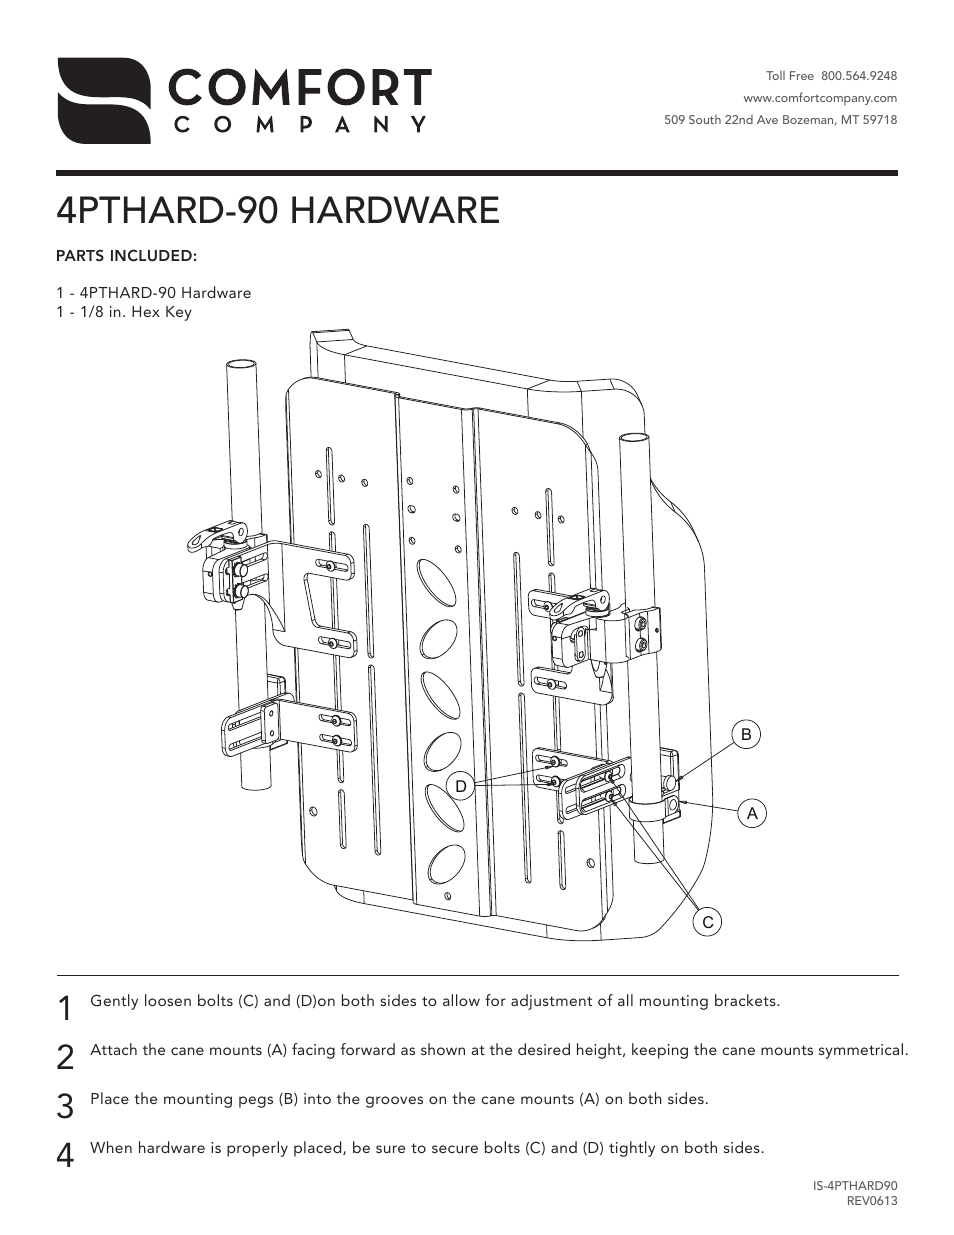 4PtHard-90 Hardware